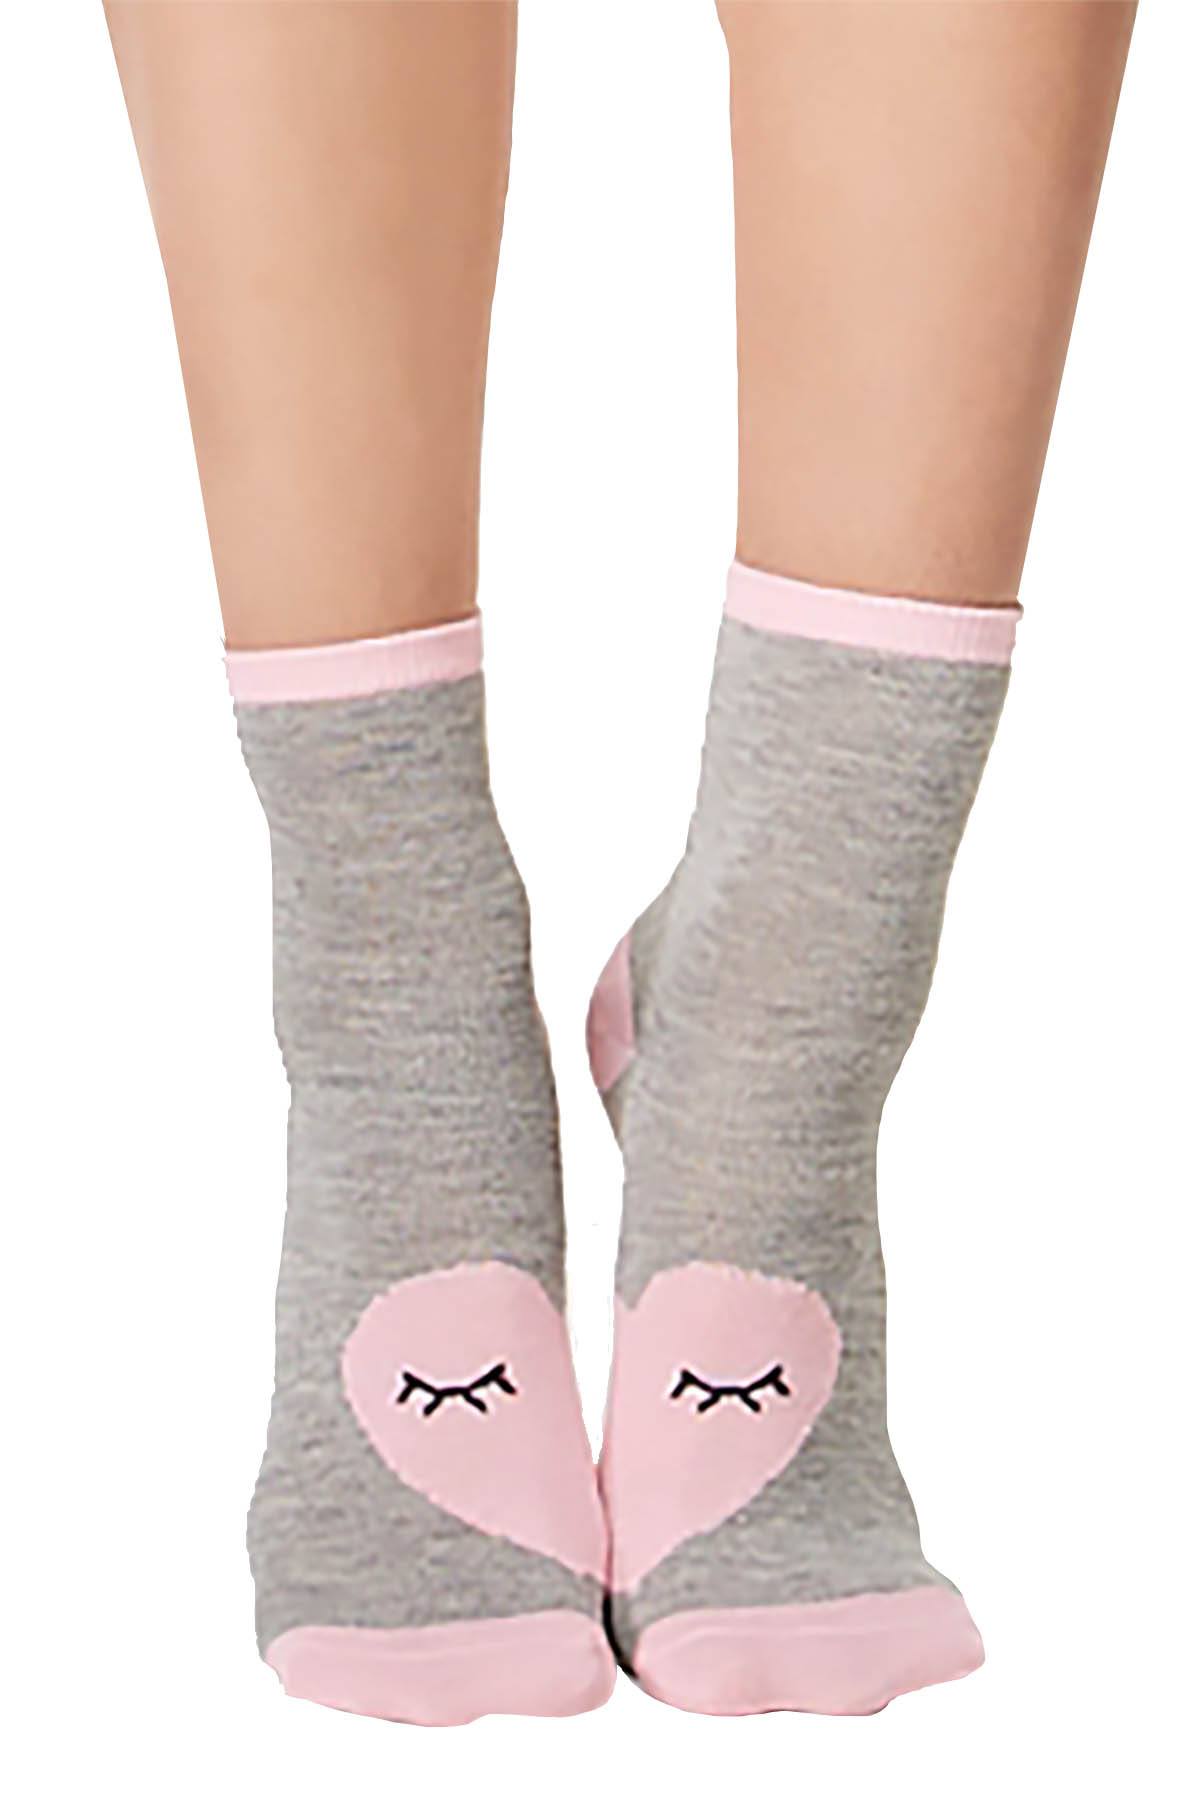 Jenni by Jennifer Moore Grey Sleep Time Sleepshirt with Socks